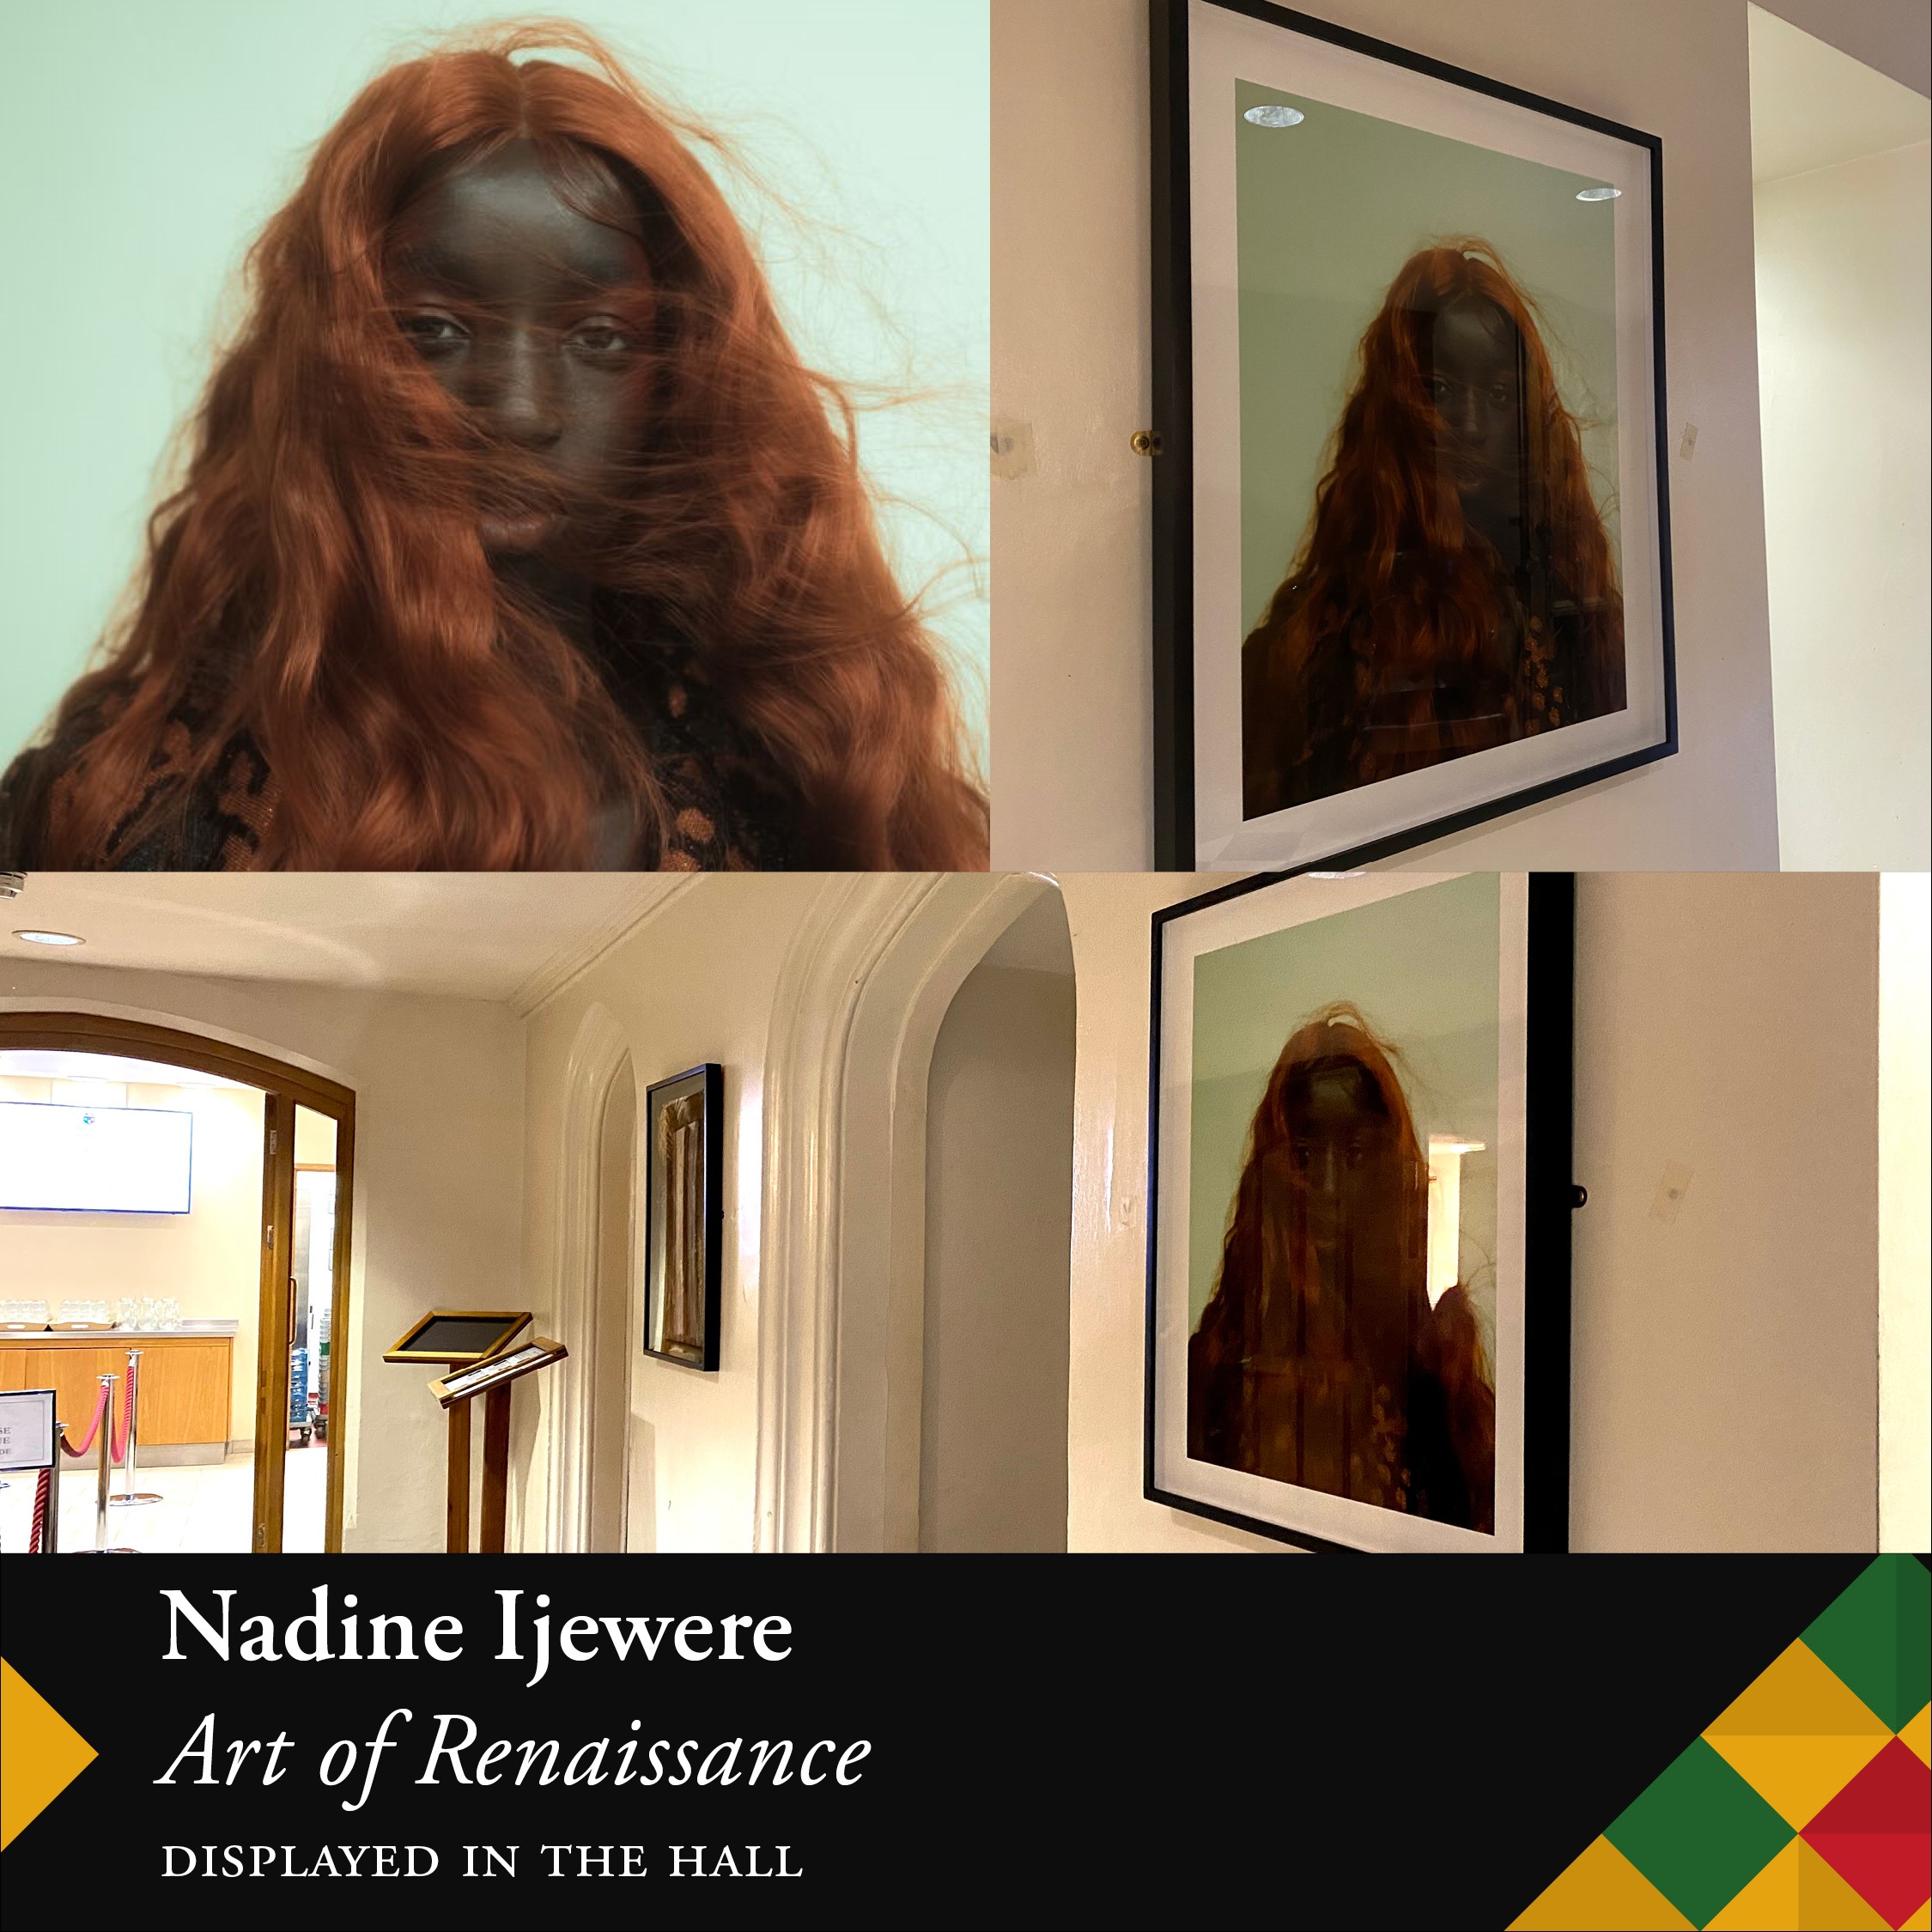 Nadine Ijewere, Art of Renaissance